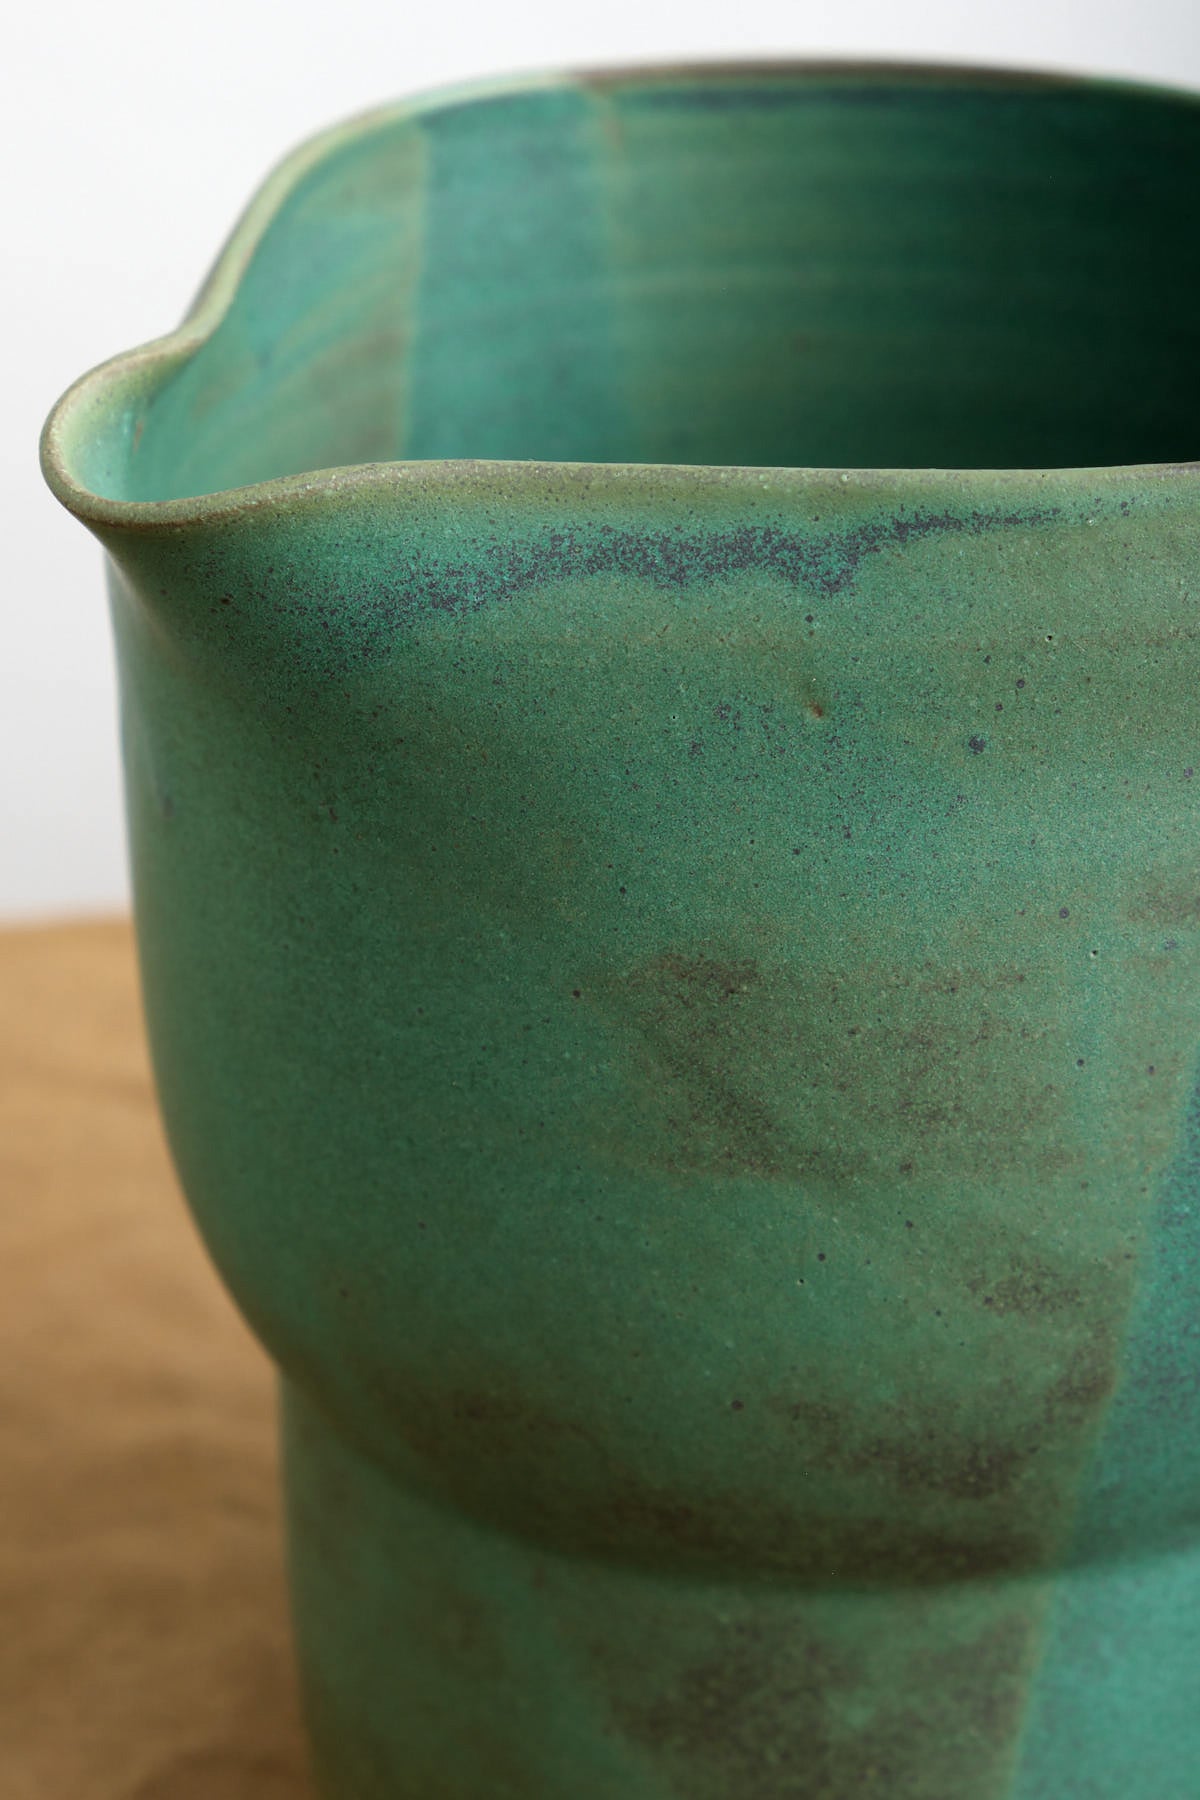 Ceramic Water pitcher with green Emerald glaze